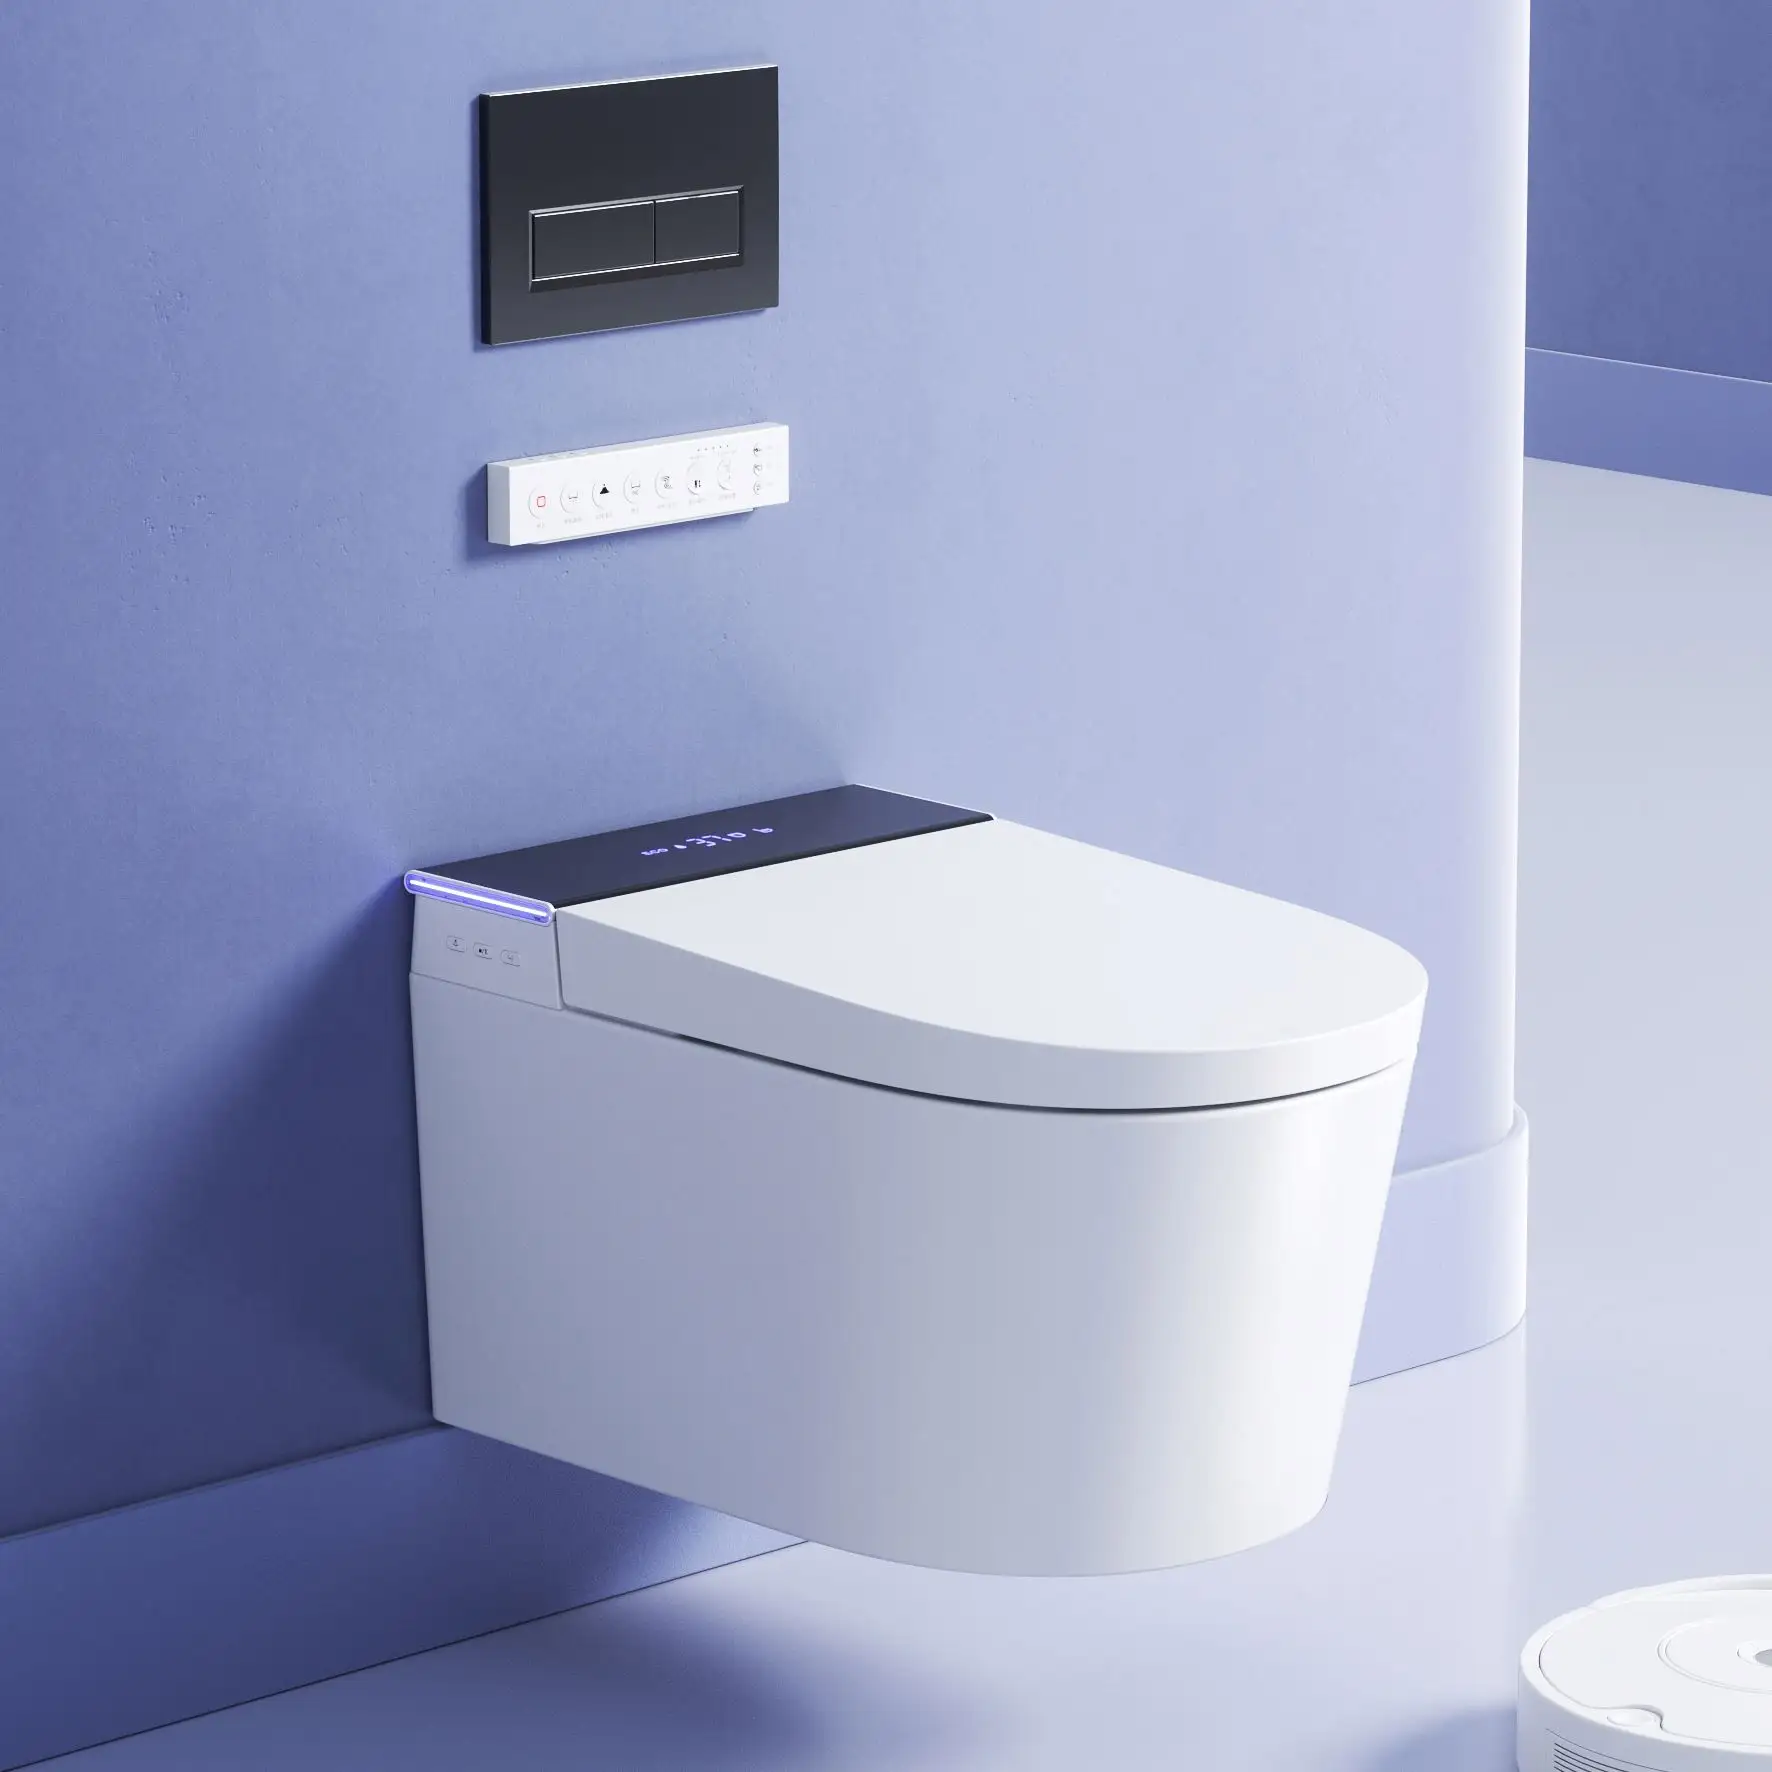 Self Clean Auto Open Sensor Flush Siphonic Automatic Toilet Bowl Floor Electronic Bathroom Wc Intelligent Smart Toilet